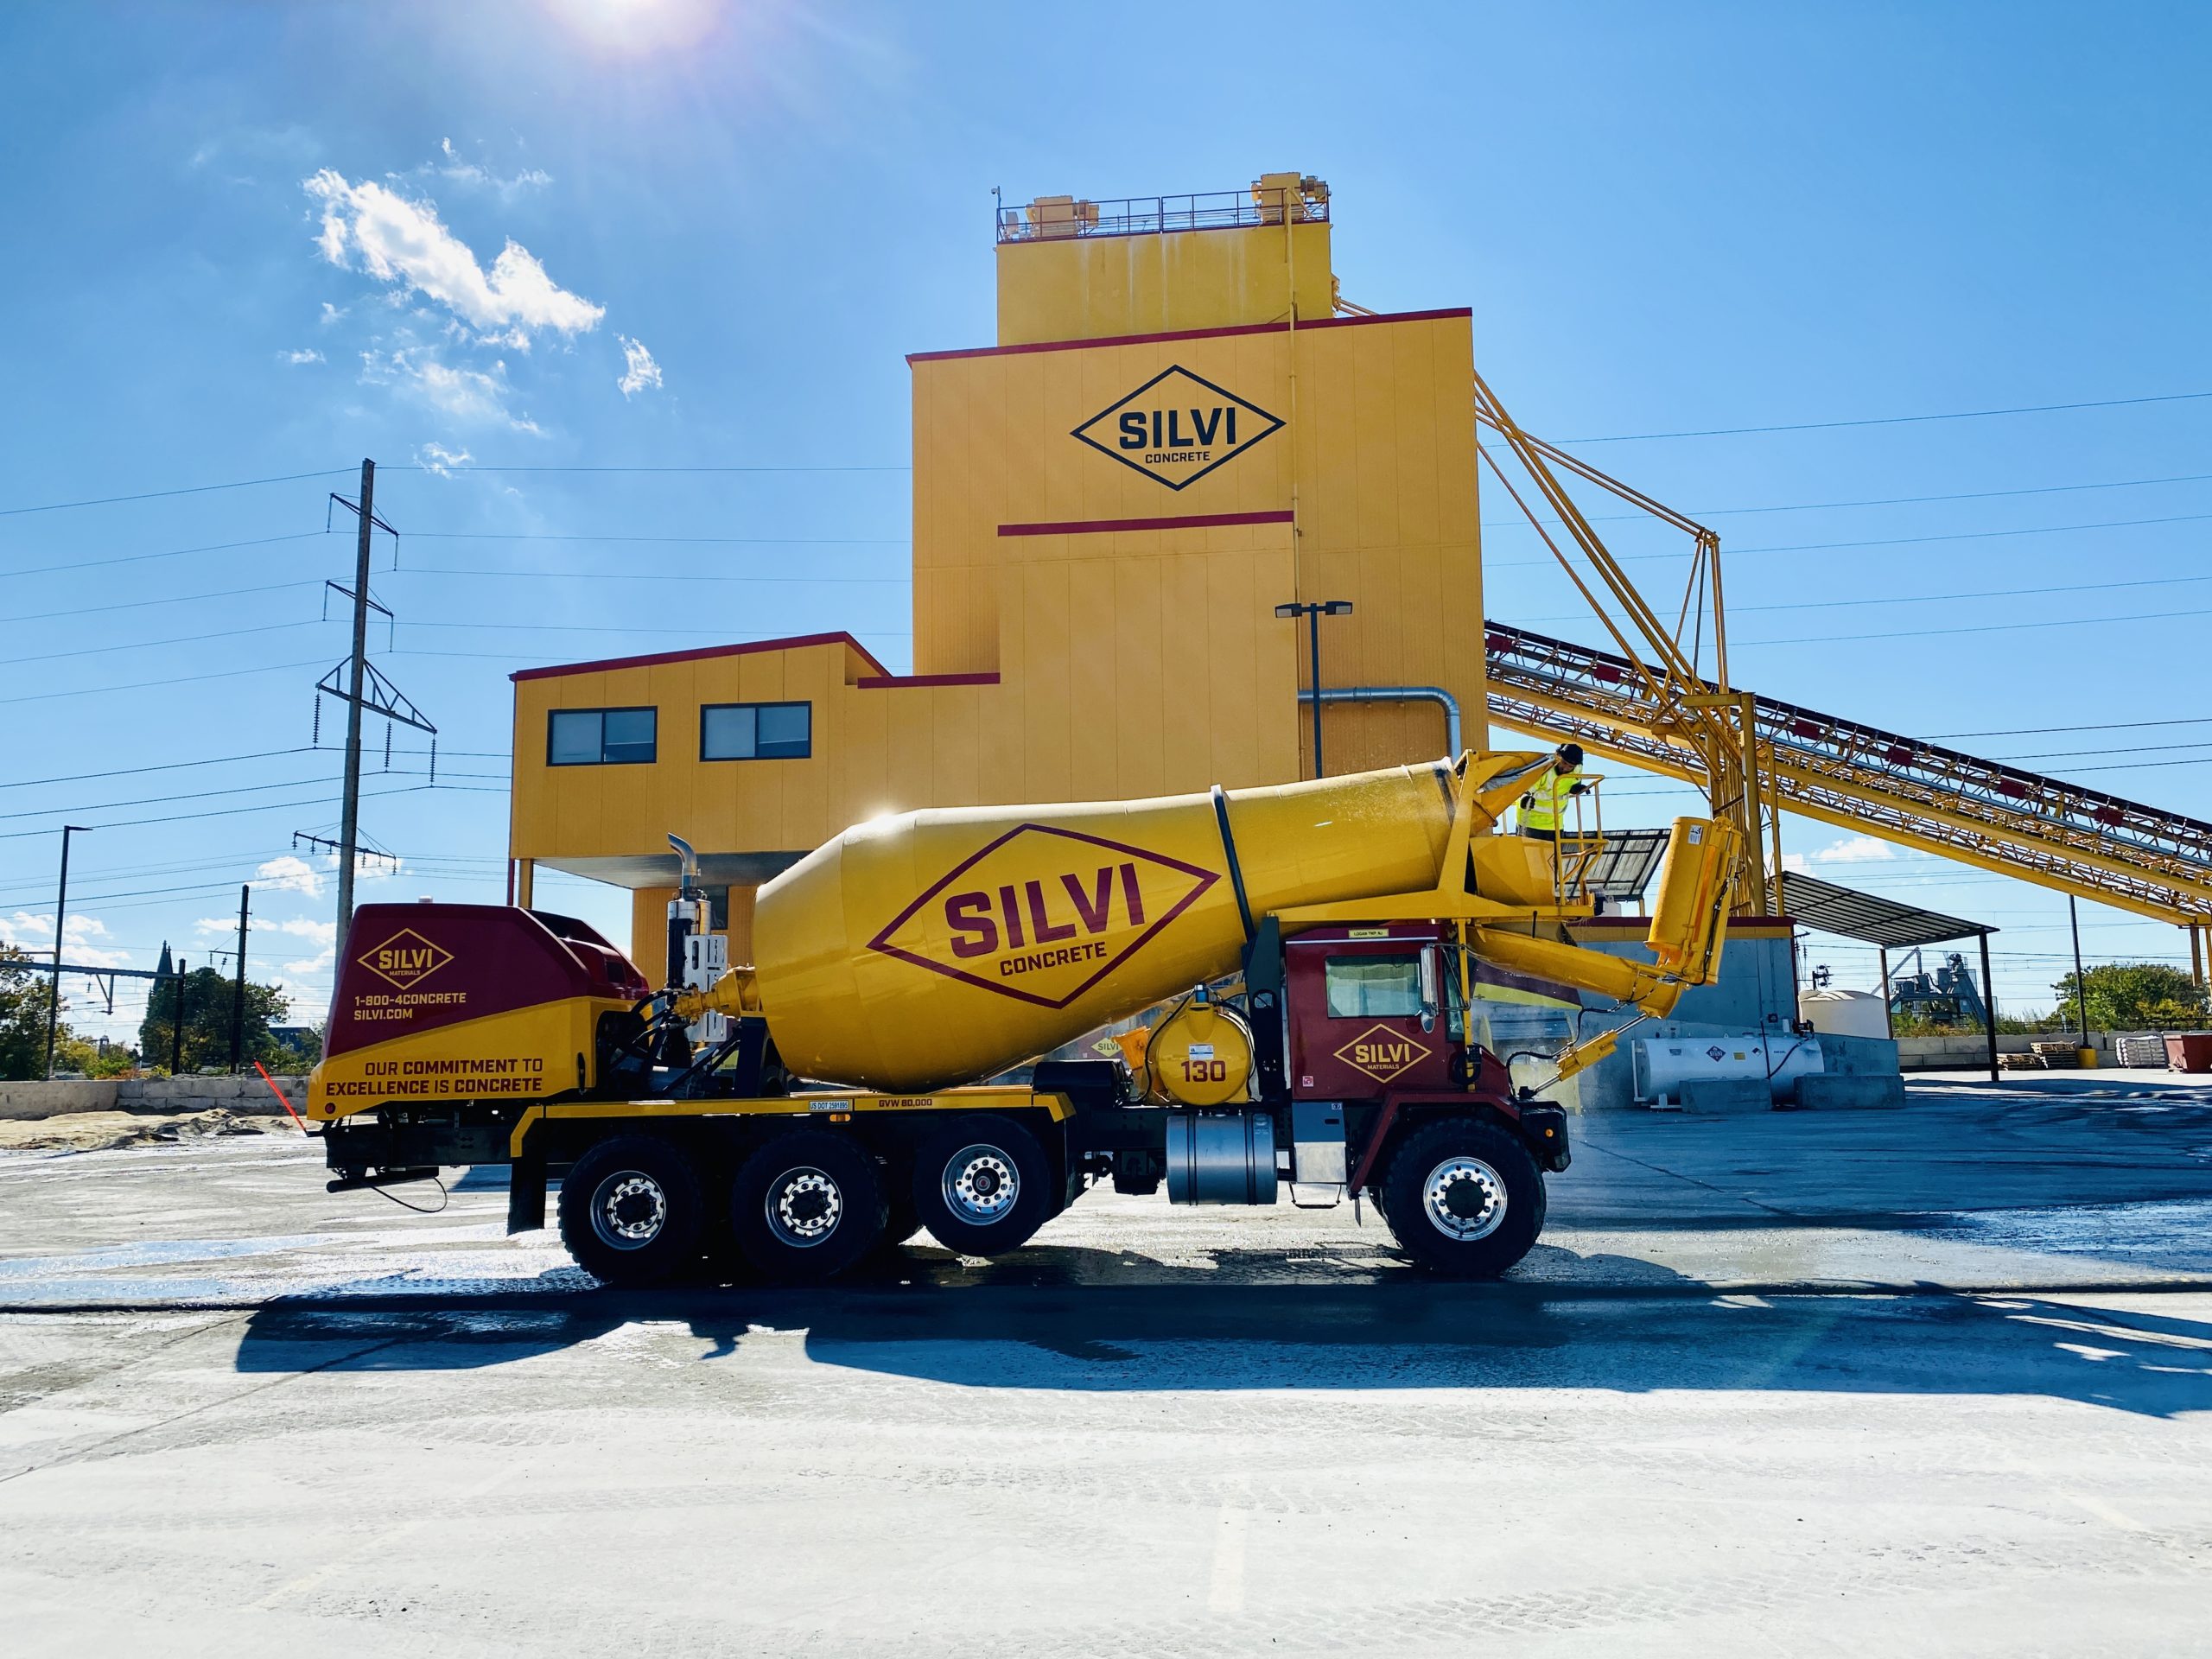 Silvi concrete truck at the ready-mix concrete plant in Philadelphia, PA